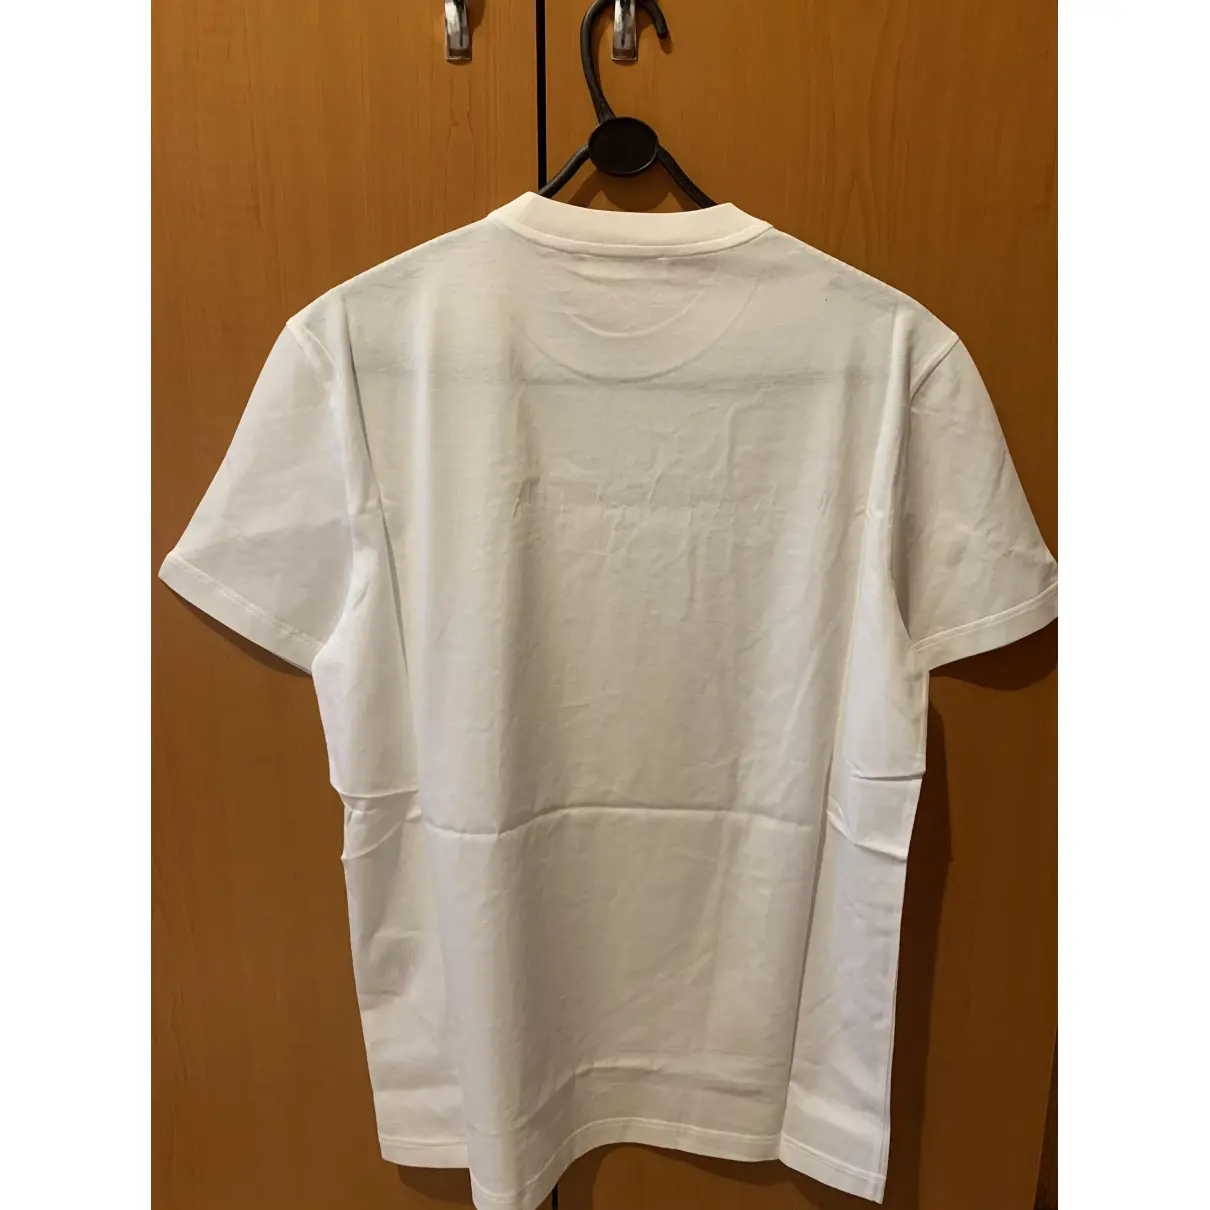 Buy Prada White Cotton T-shirt online